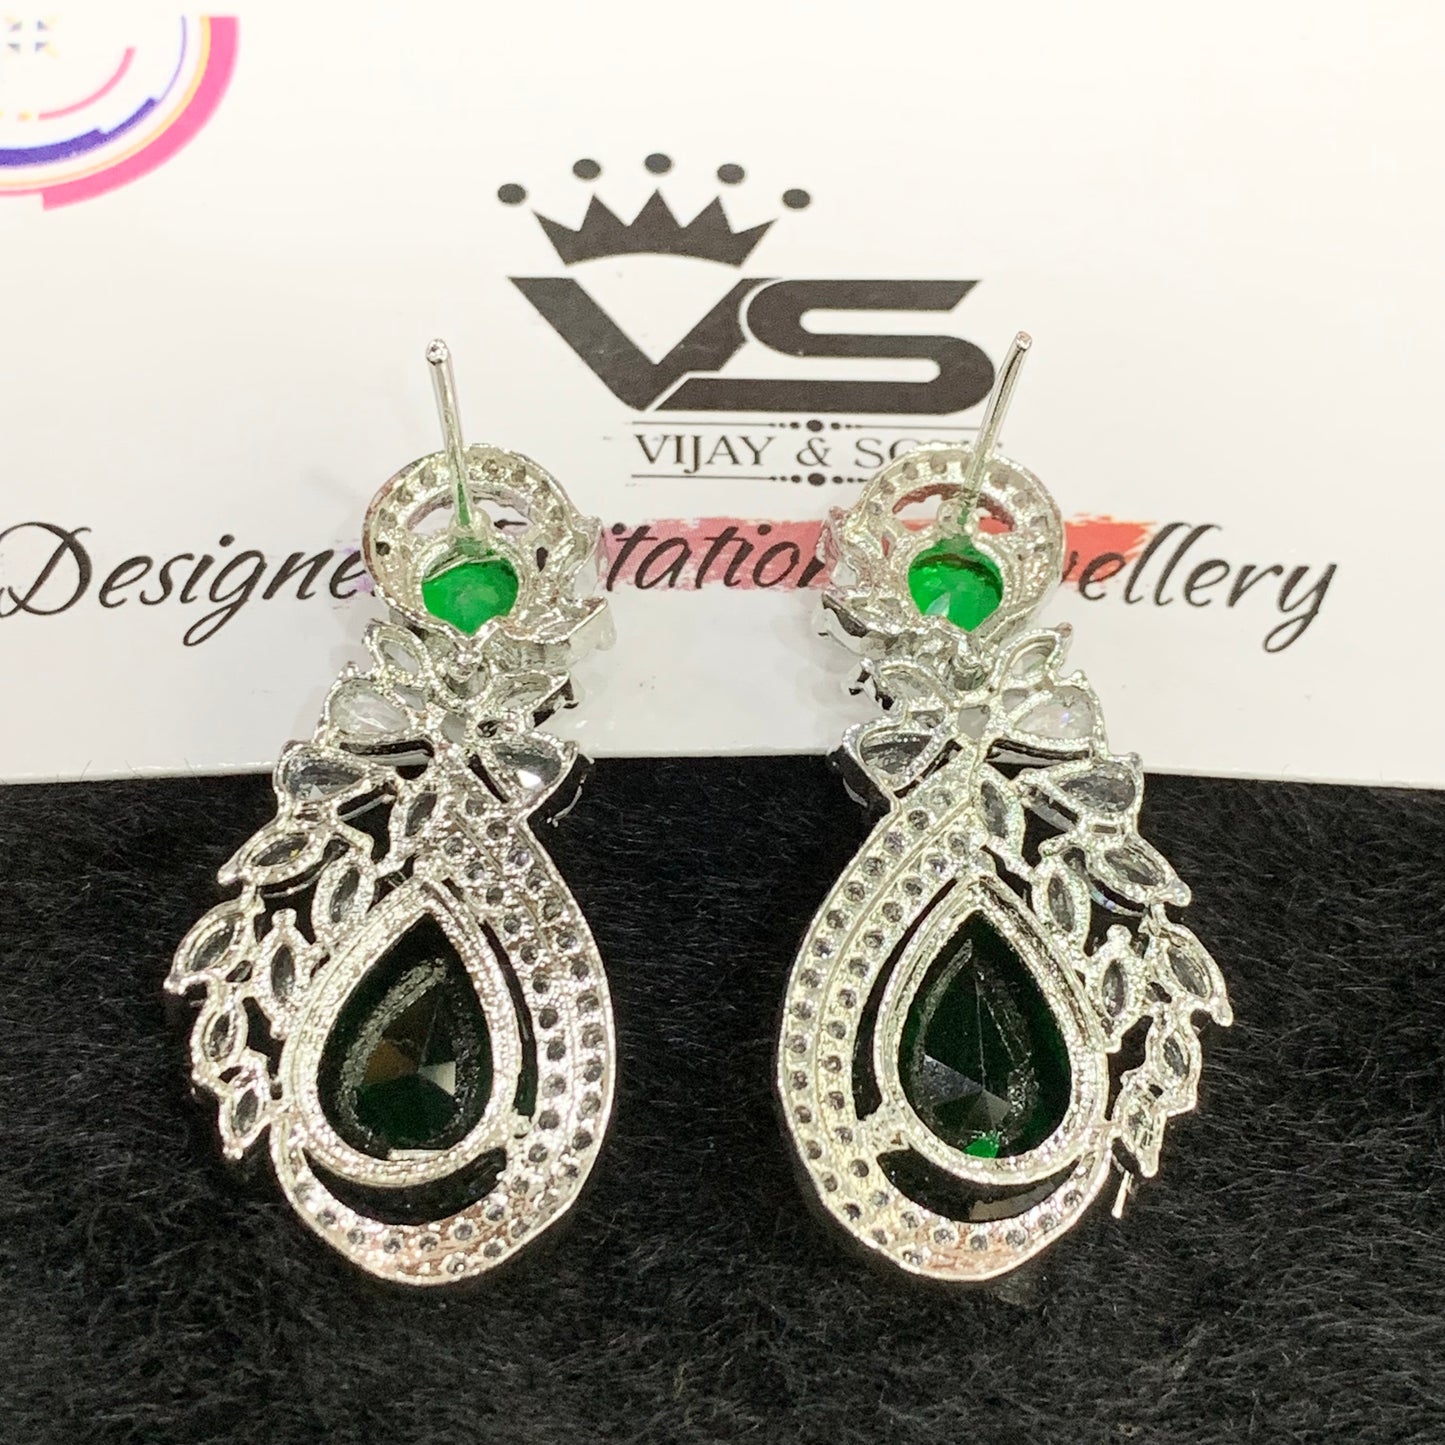 American diamond earrings 464476